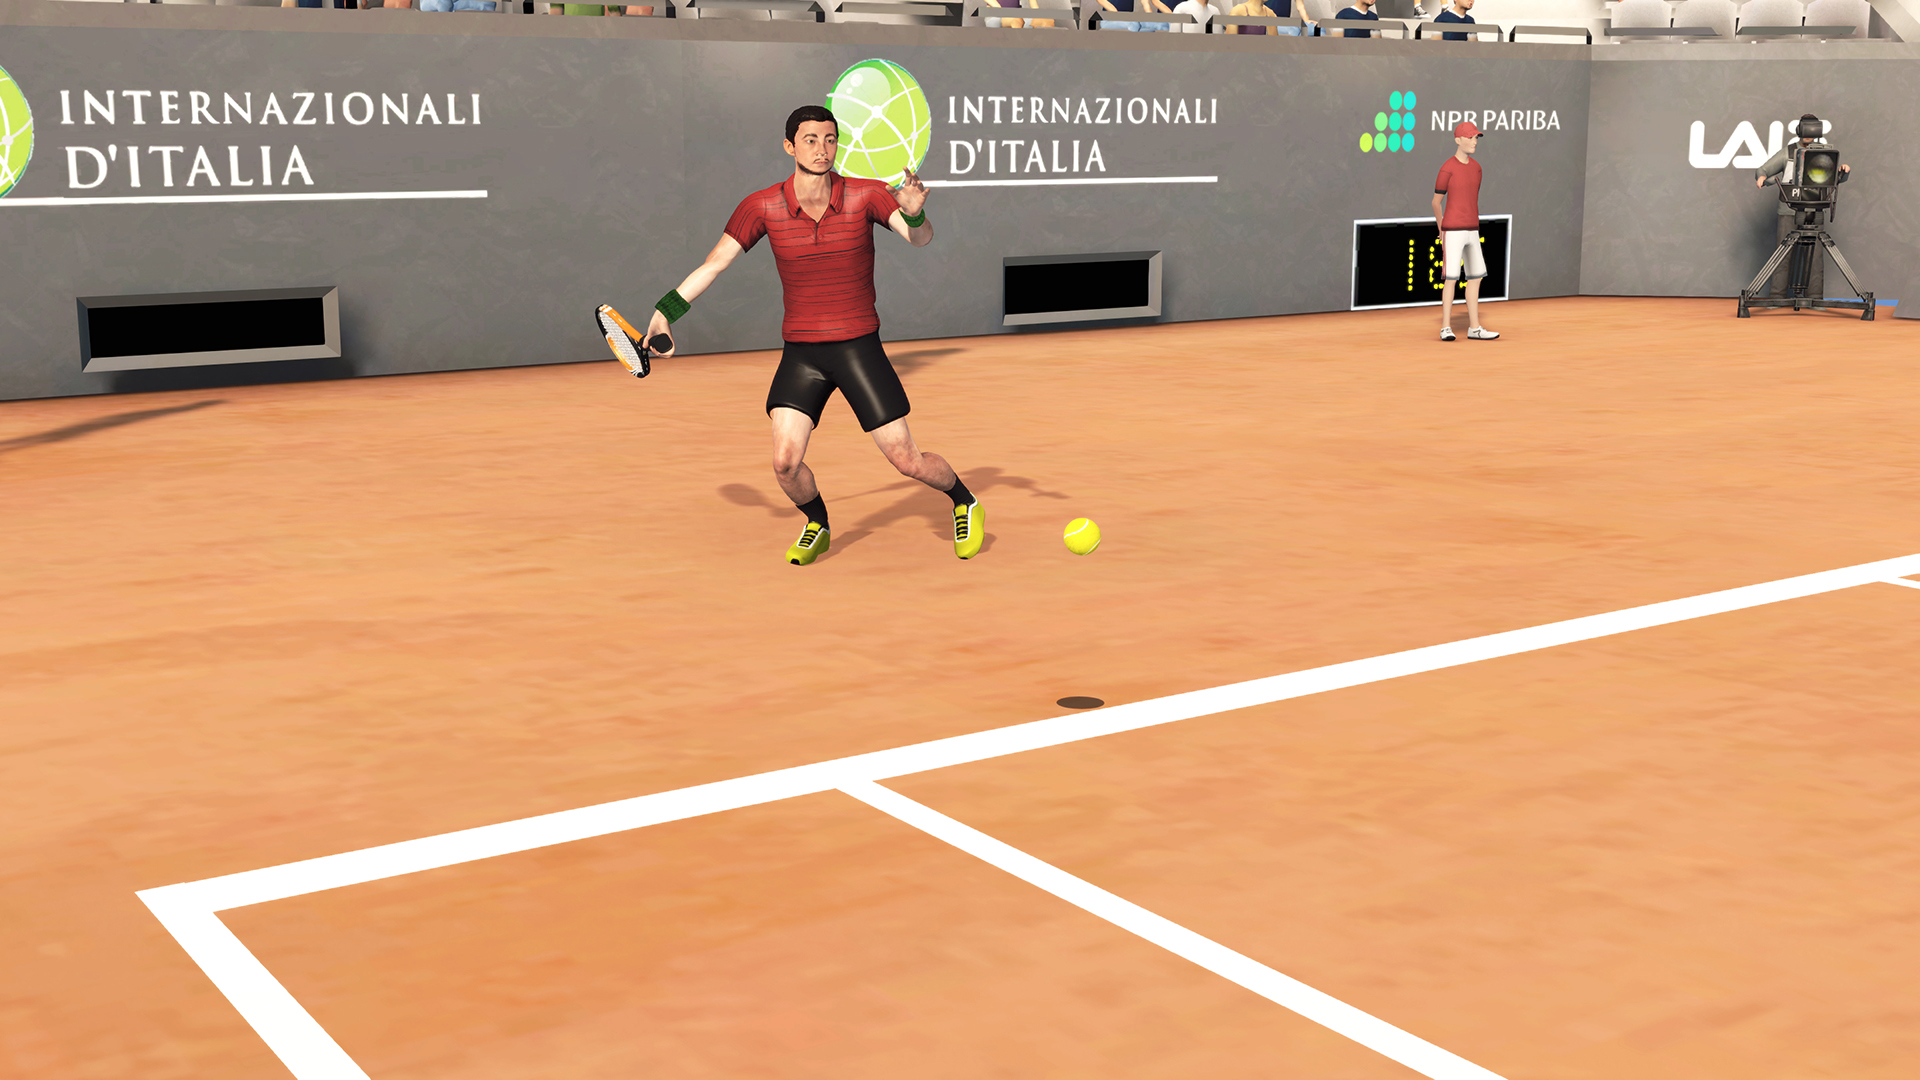 First Person Tennis - The Real Tennis Simulator screenshot